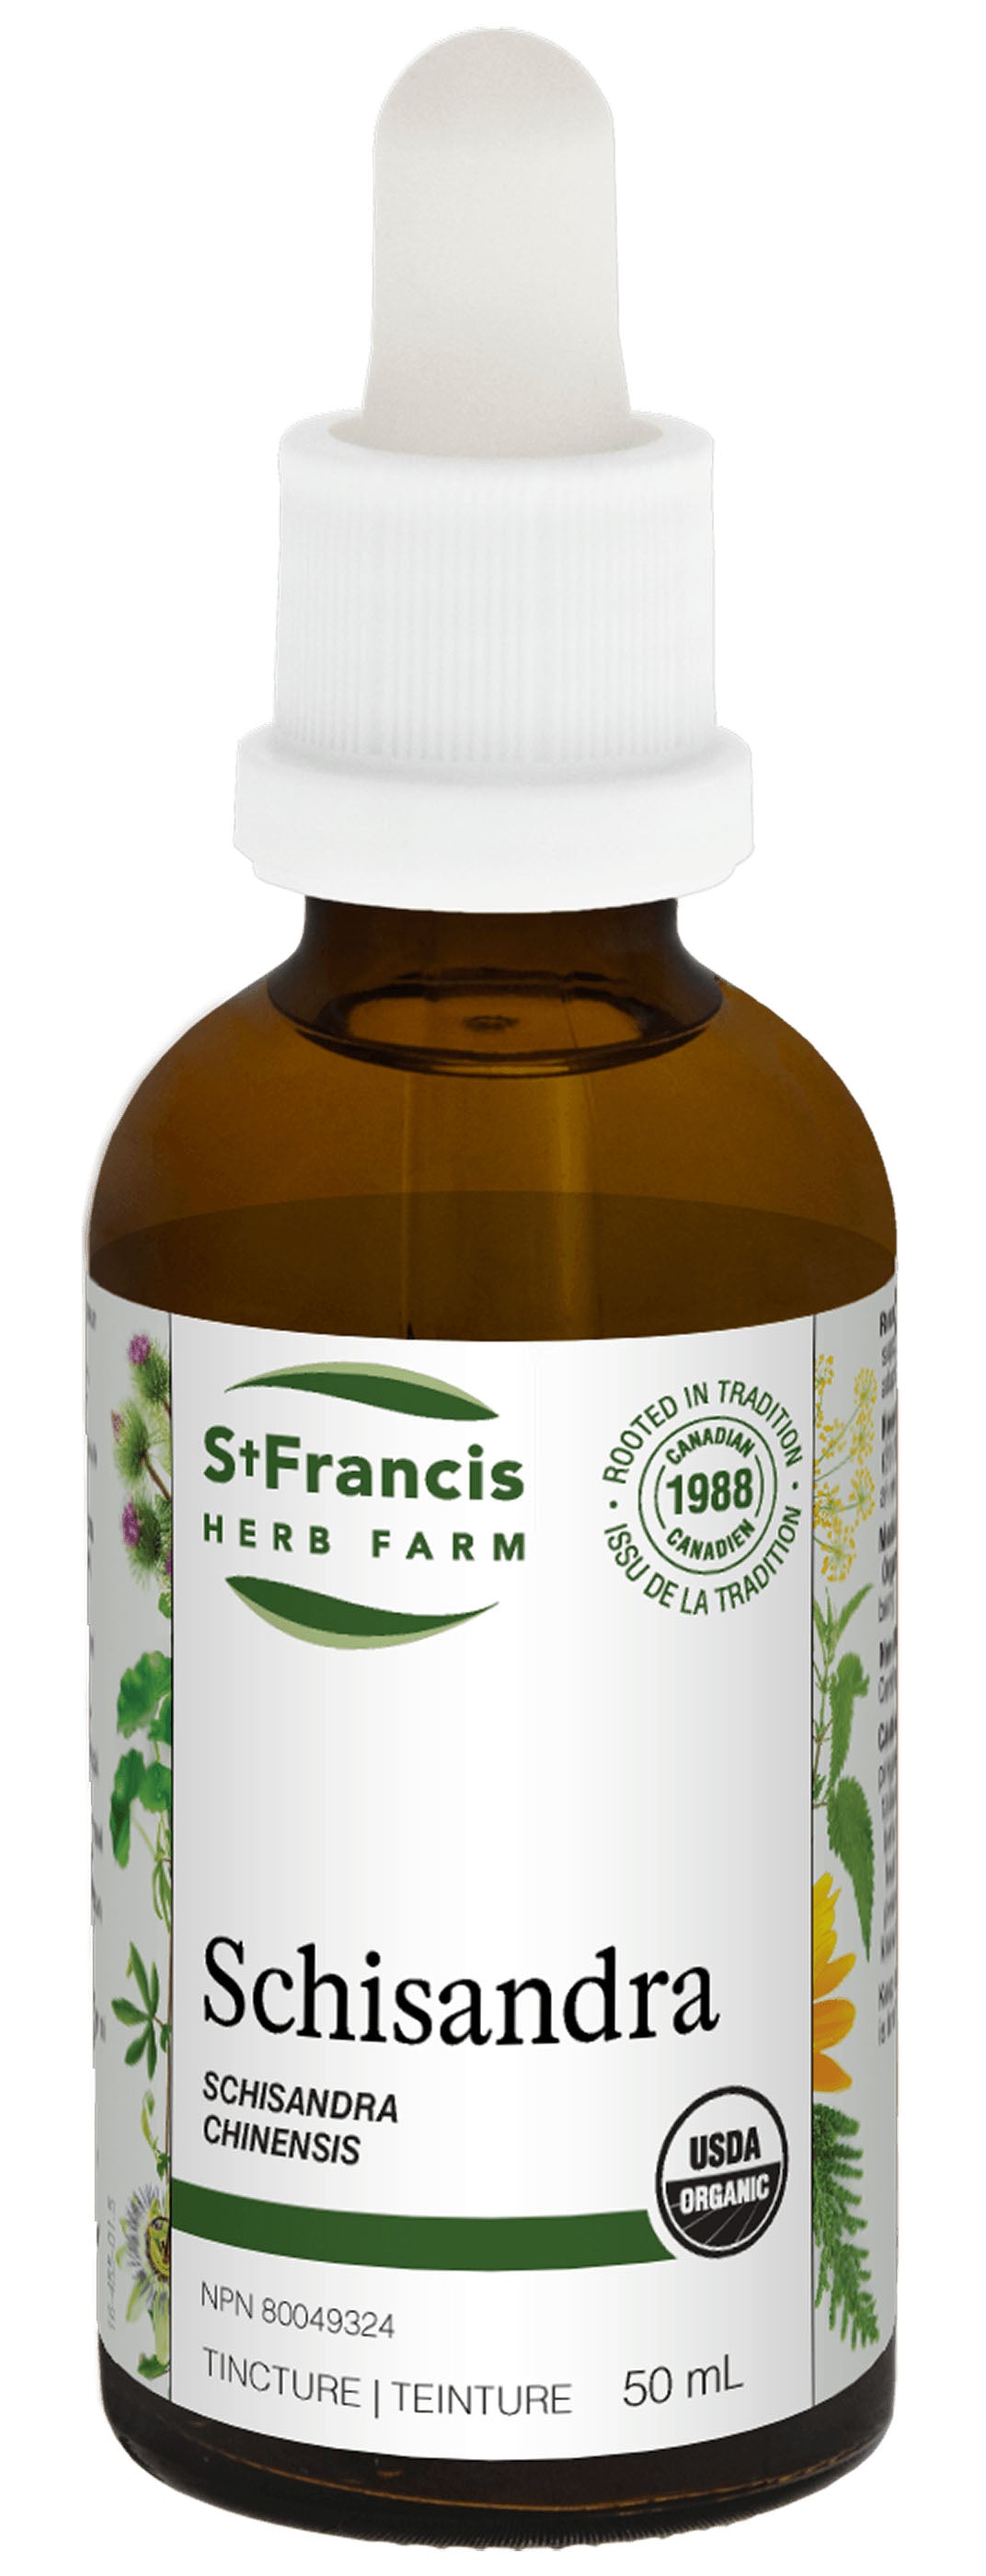 ST FRANCIS HERB FARM Schisandra (50 ml)